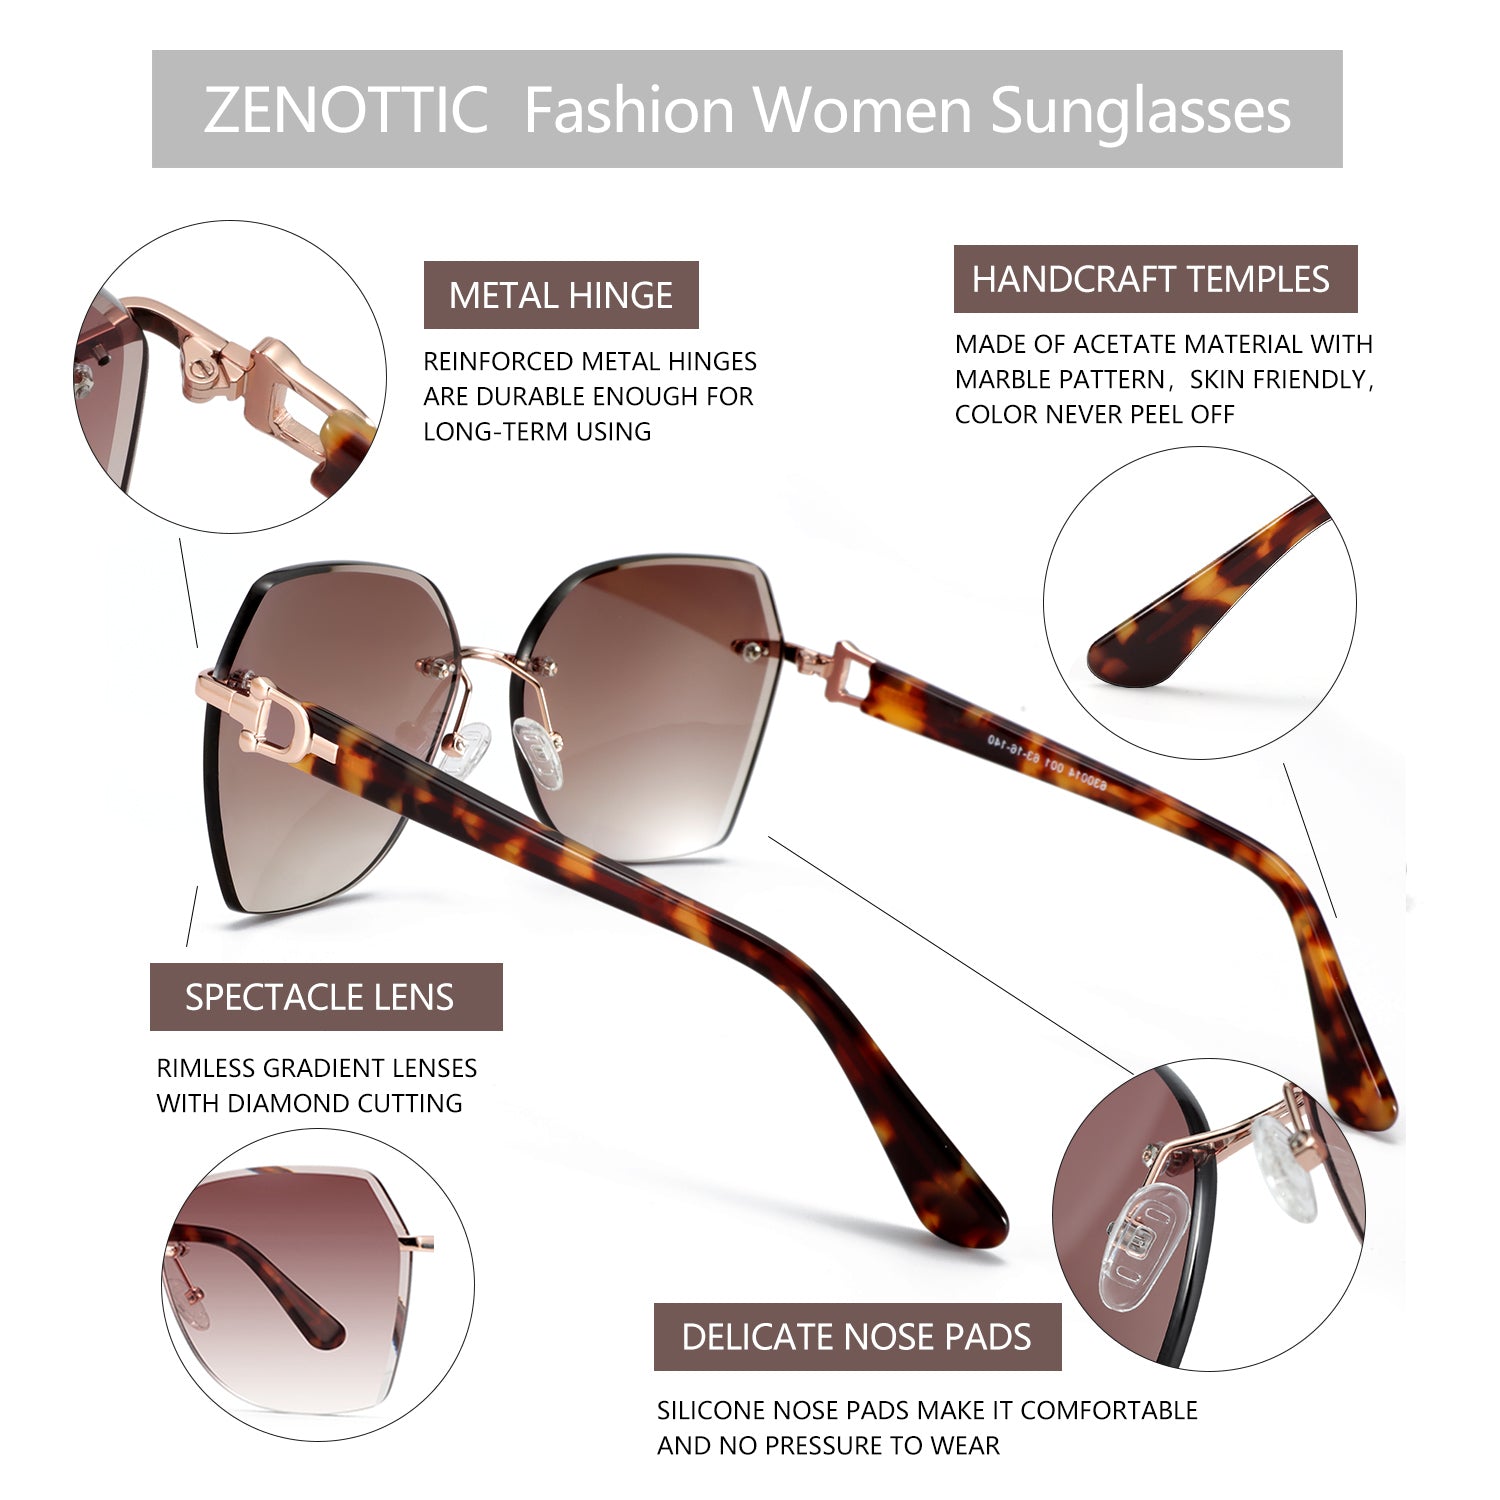 Zenottic Sun Glasses Cora